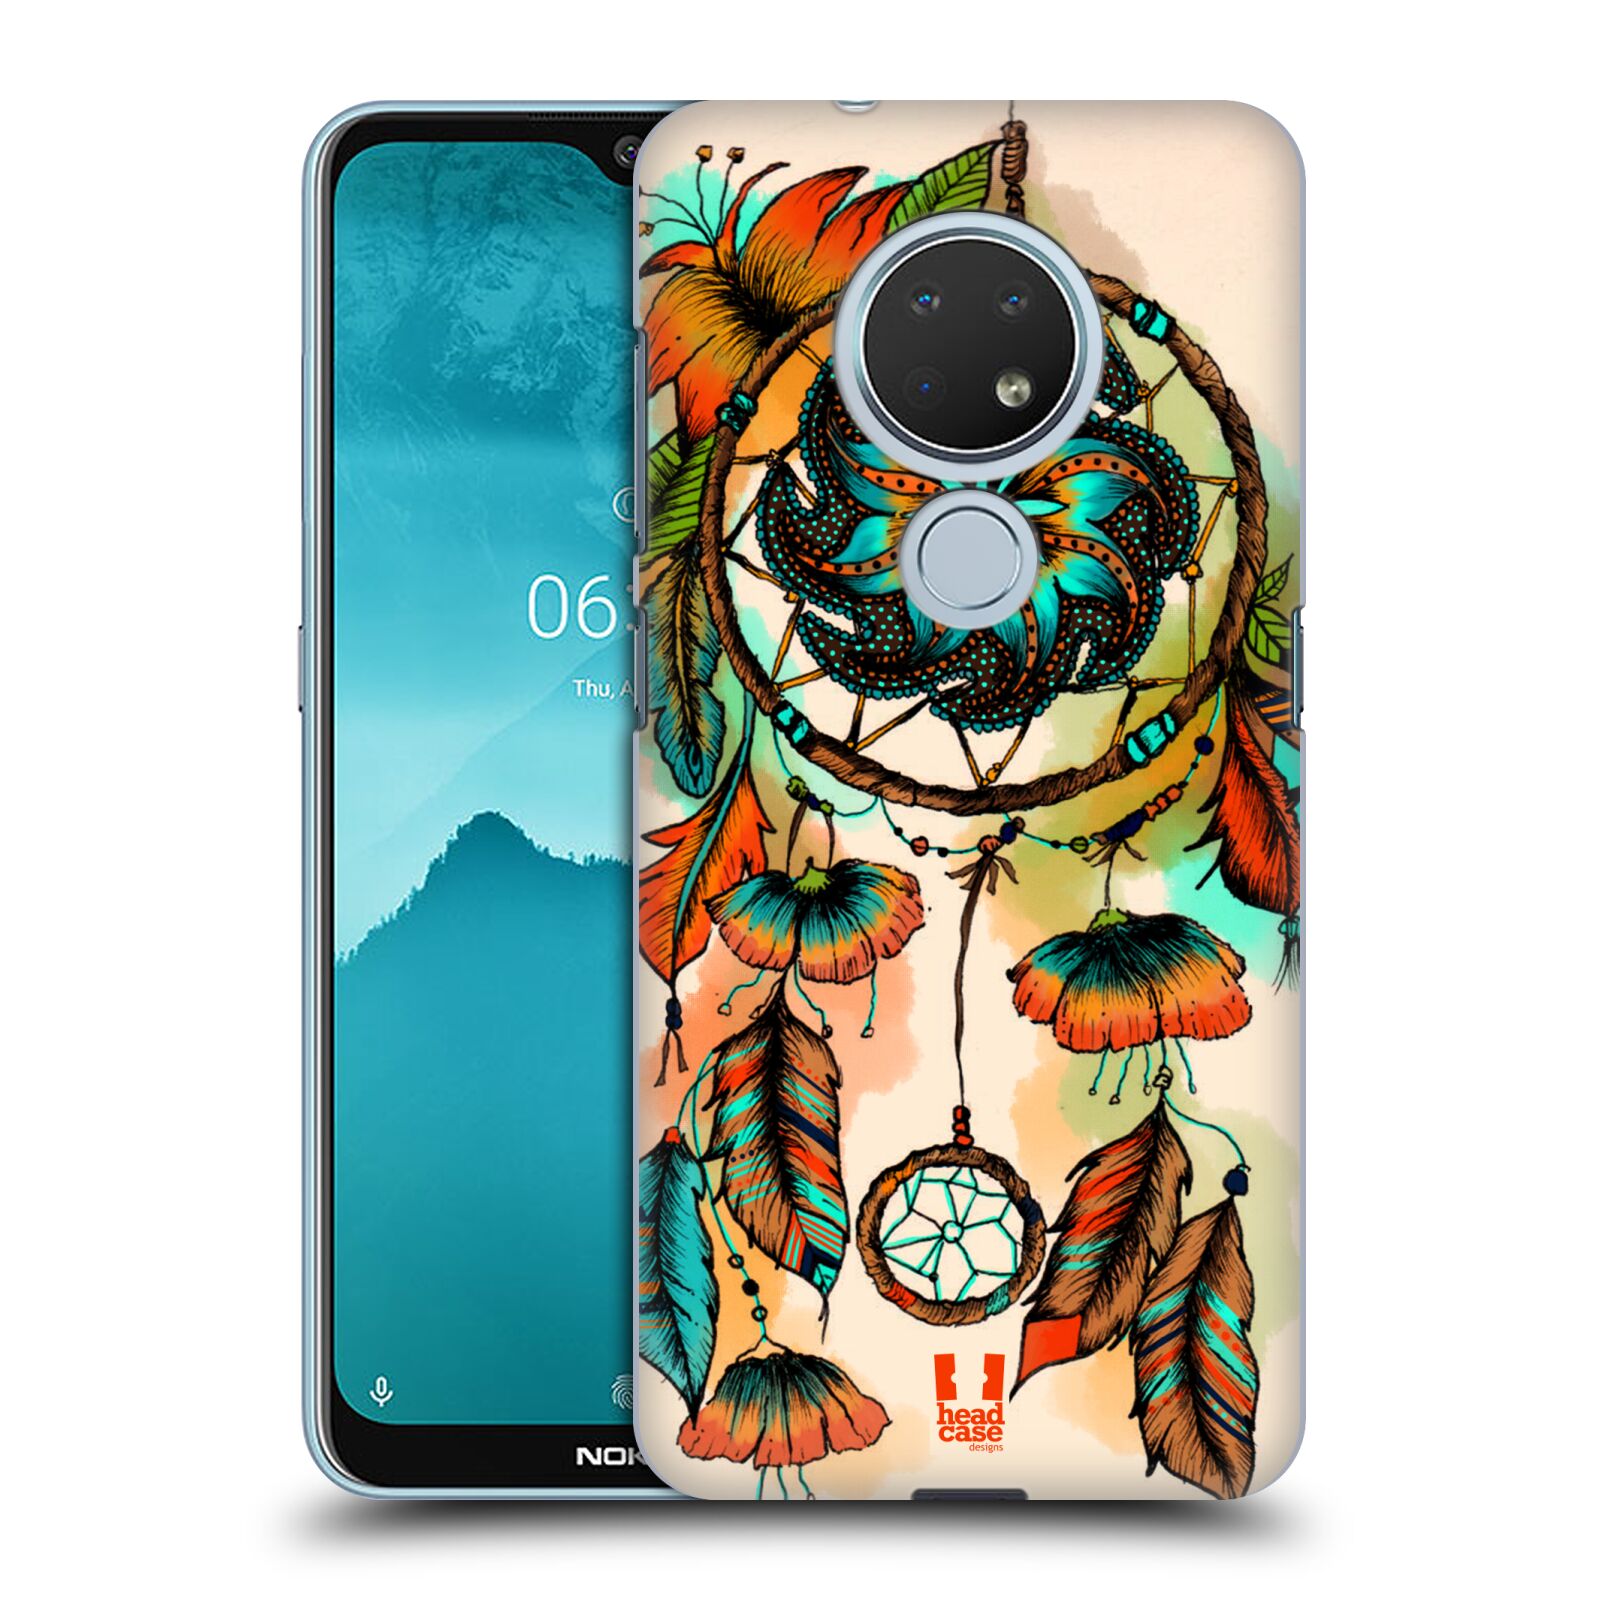 Pouzdro na mobil Nokia 6.2 - HEAD CASE - vzor Květy lapač snů merňka oranžová